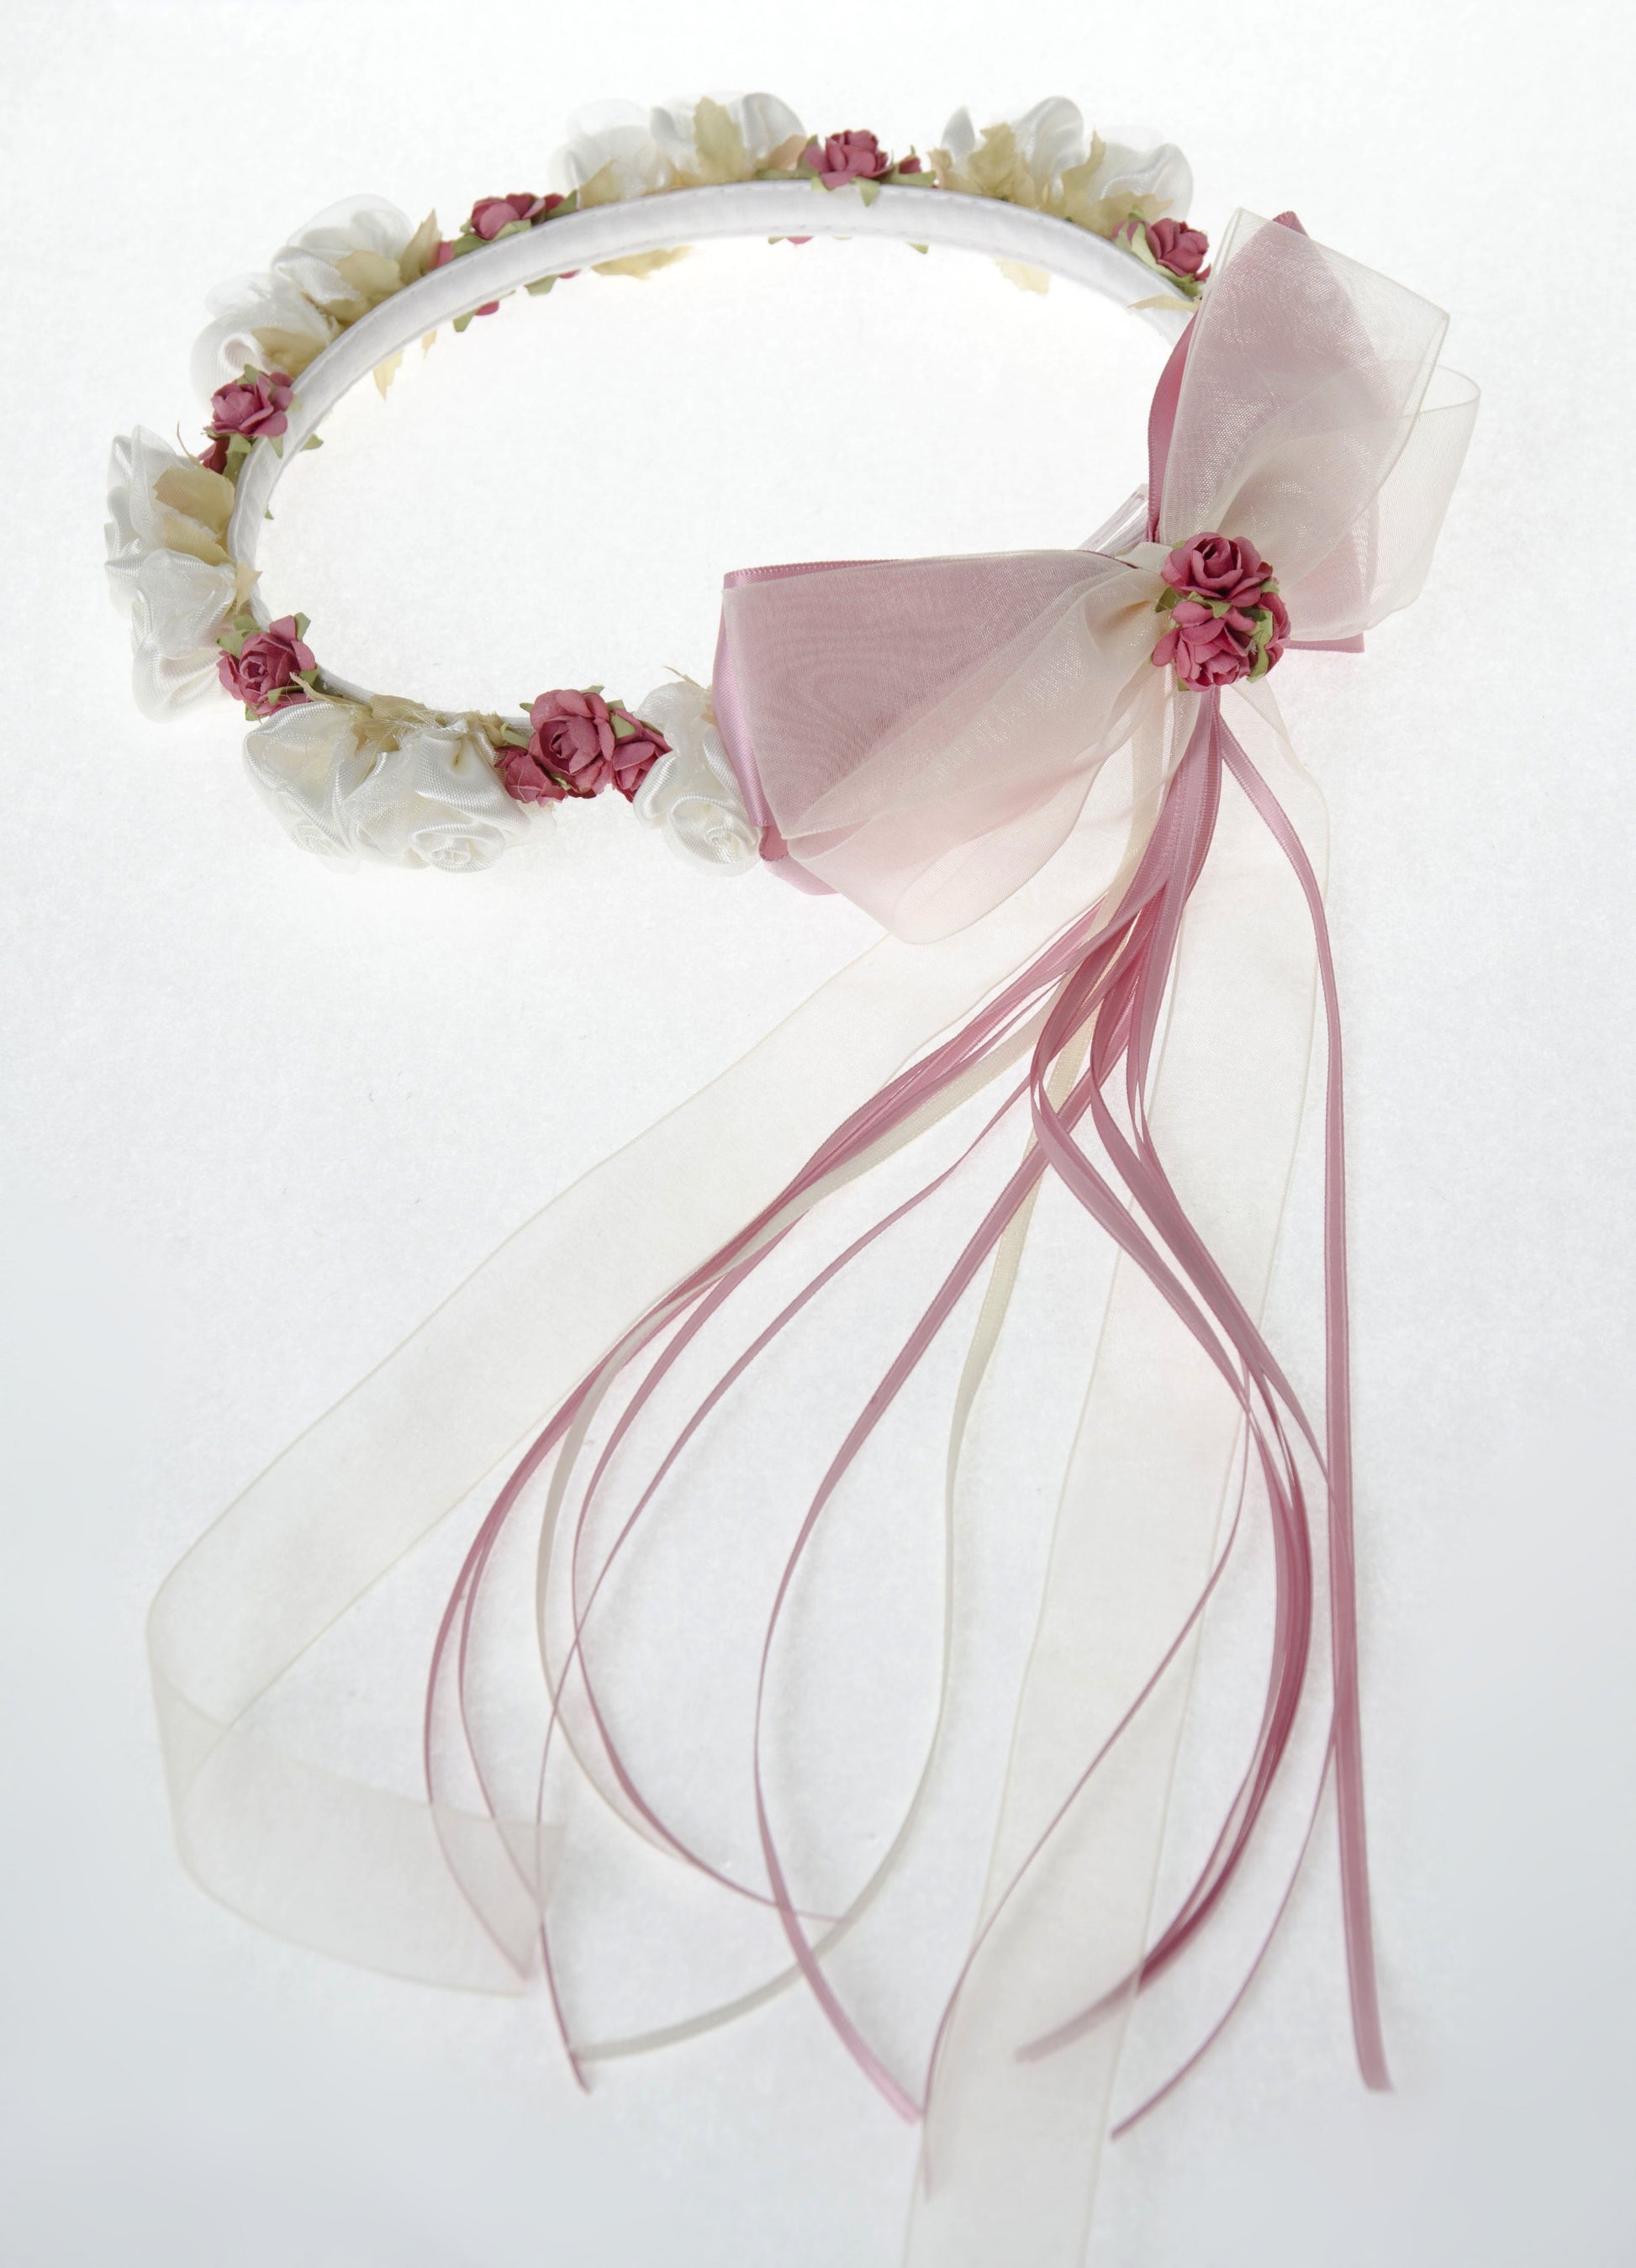 Accessories - Floral Crown (Wreath)